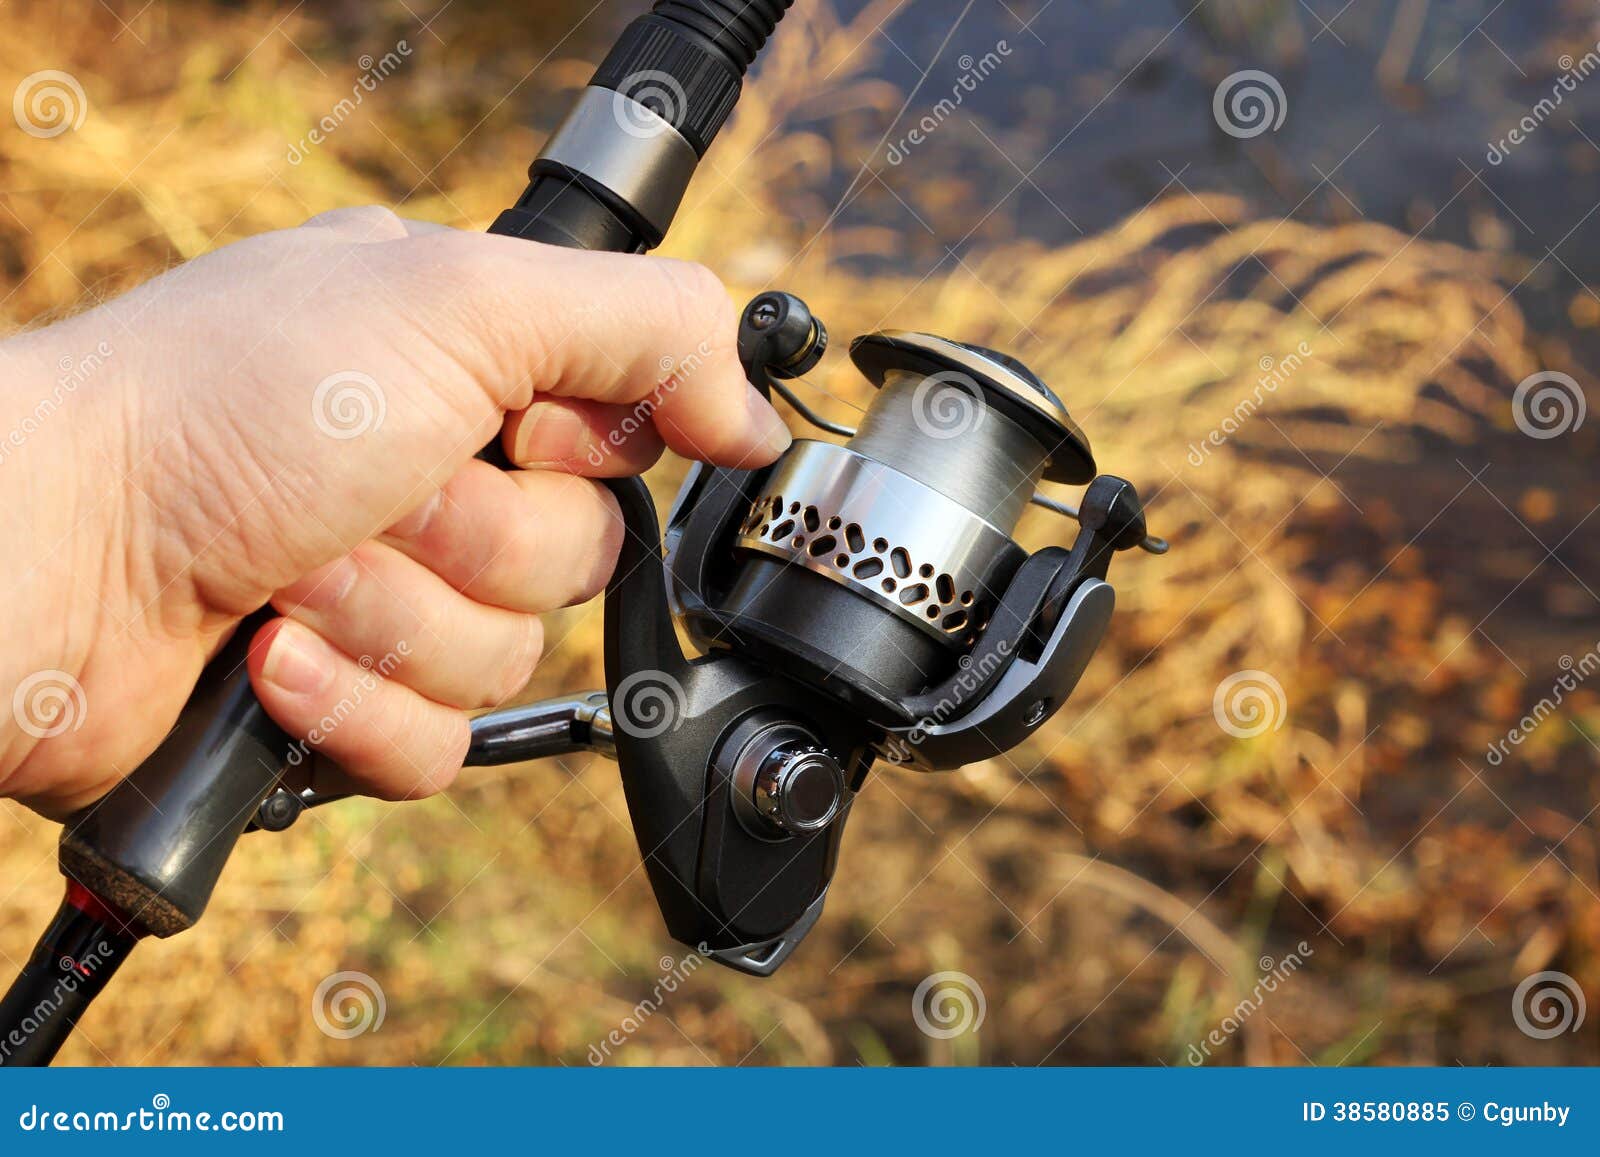 https://thumbs.dreamstime.com/z/hand-holding-fishing-pole-fishing-reel-close-up-38580885.jpg